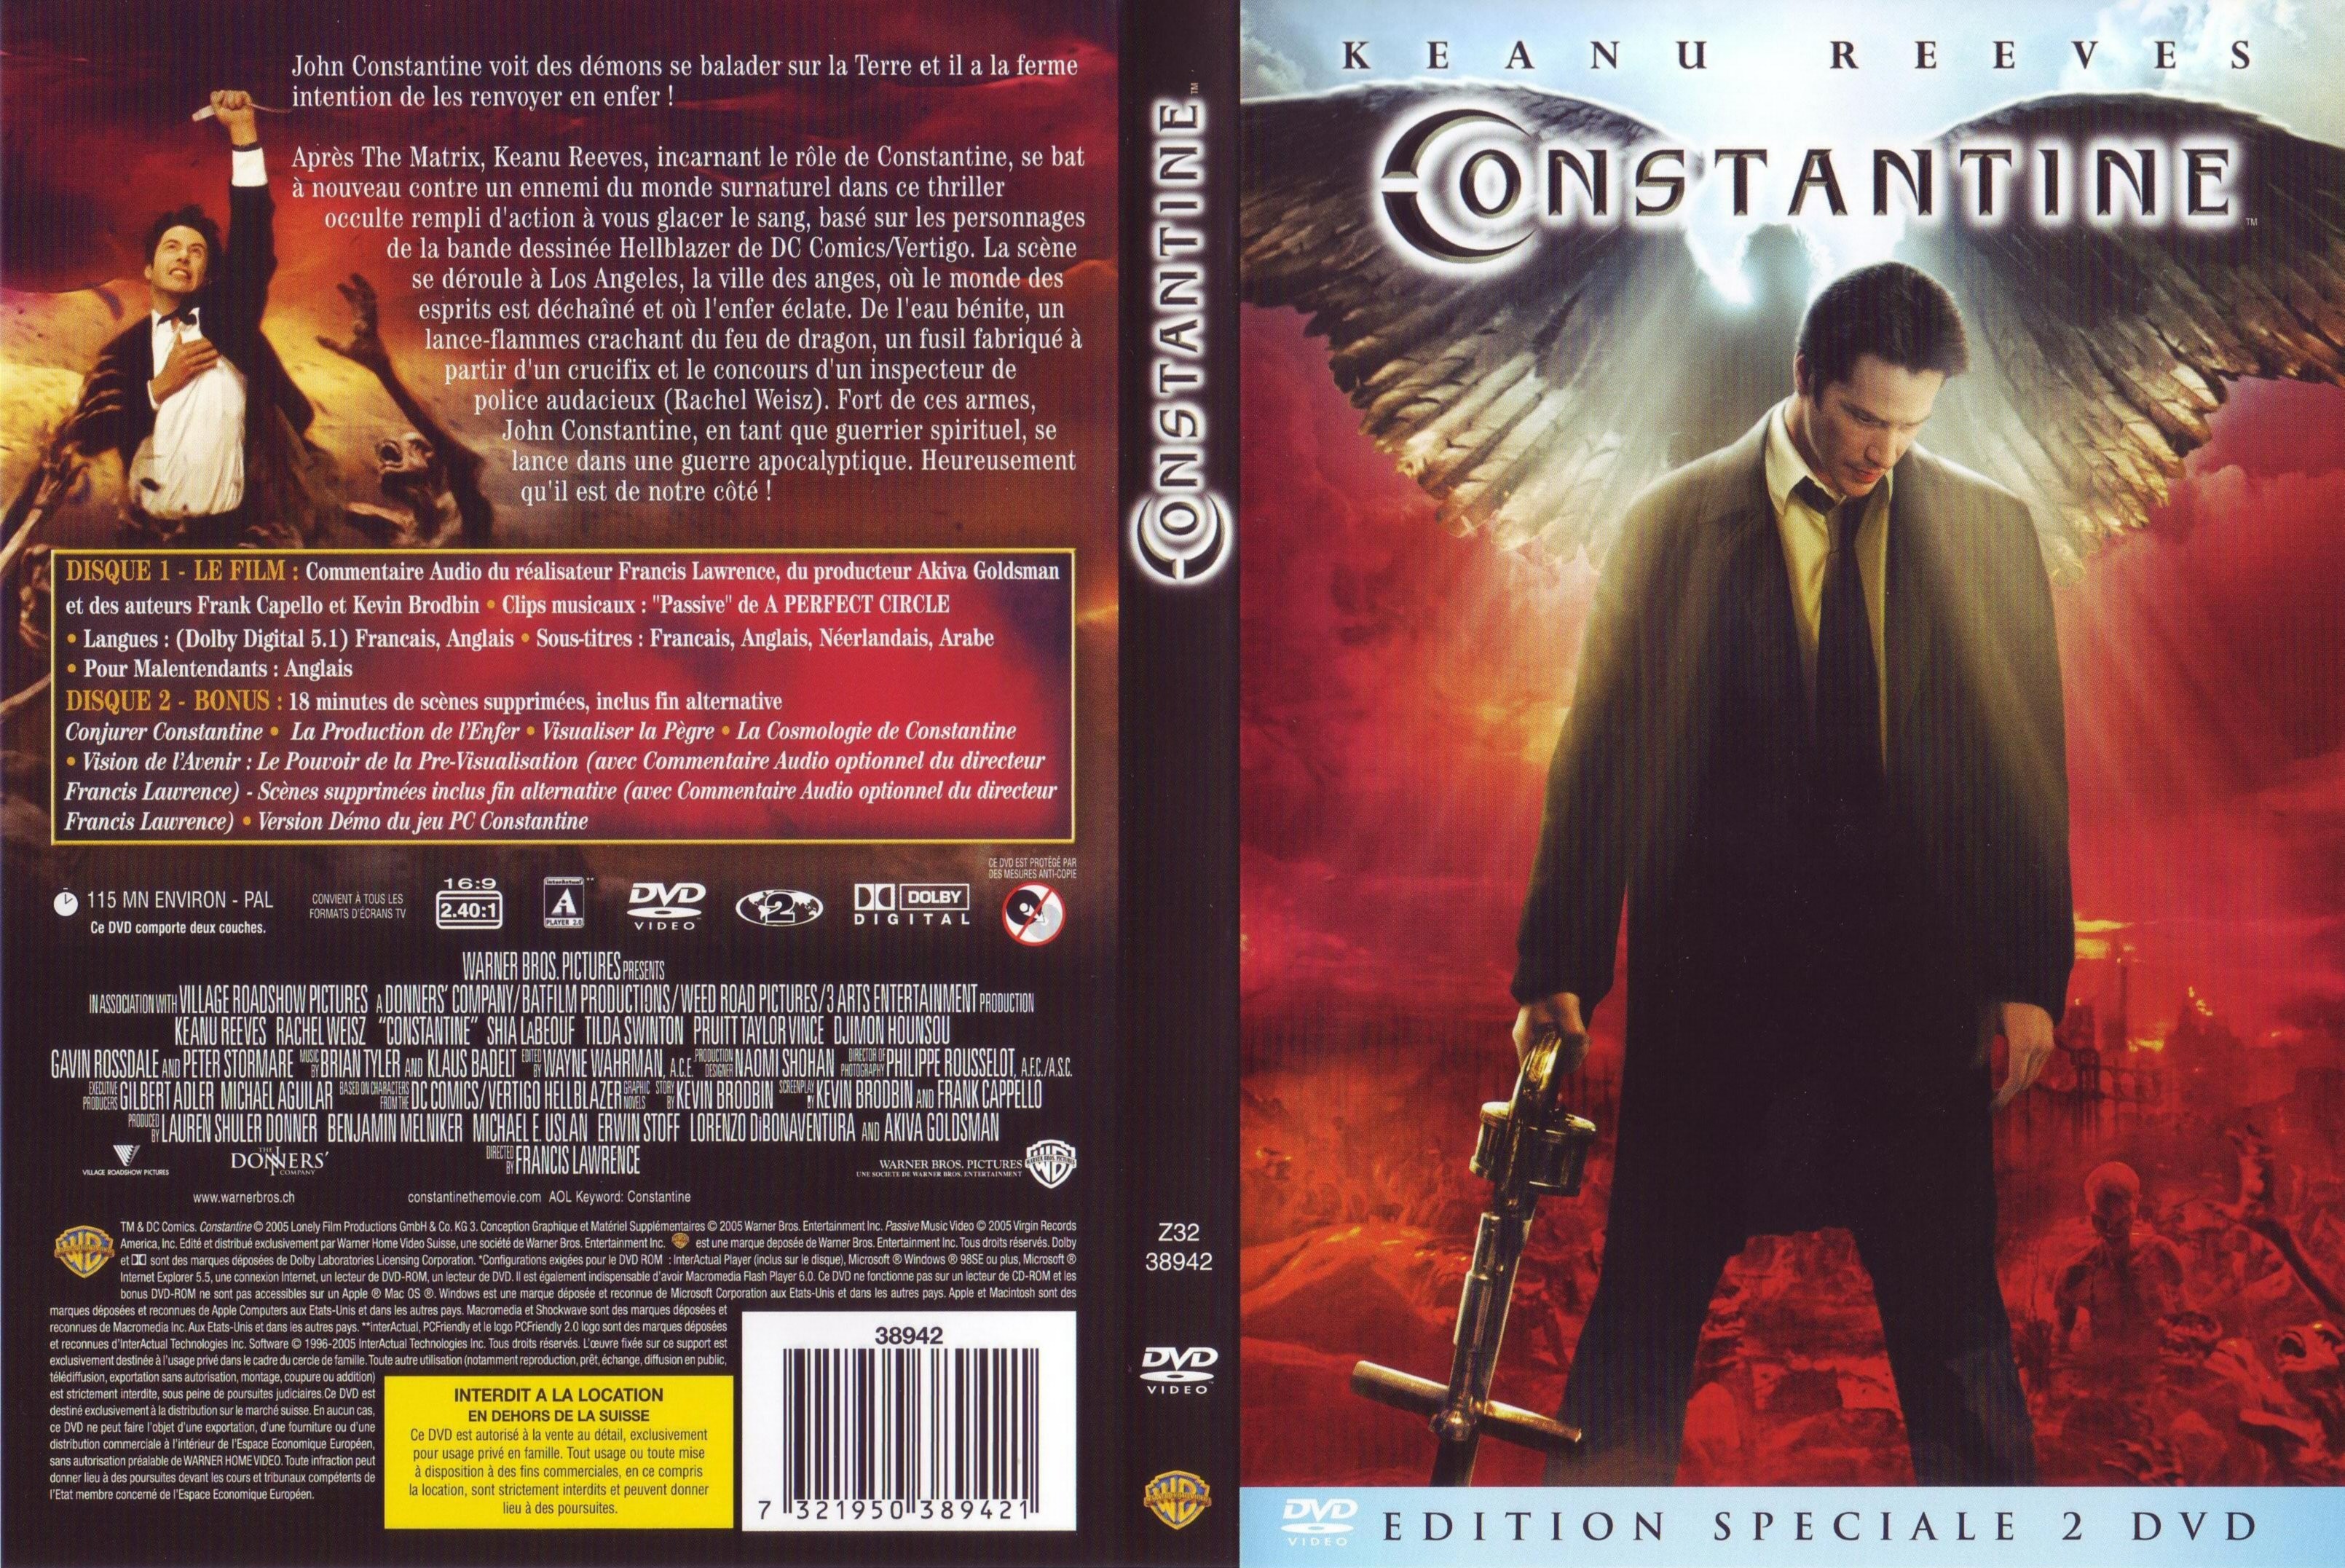 Jaquette DVD Constantine v2